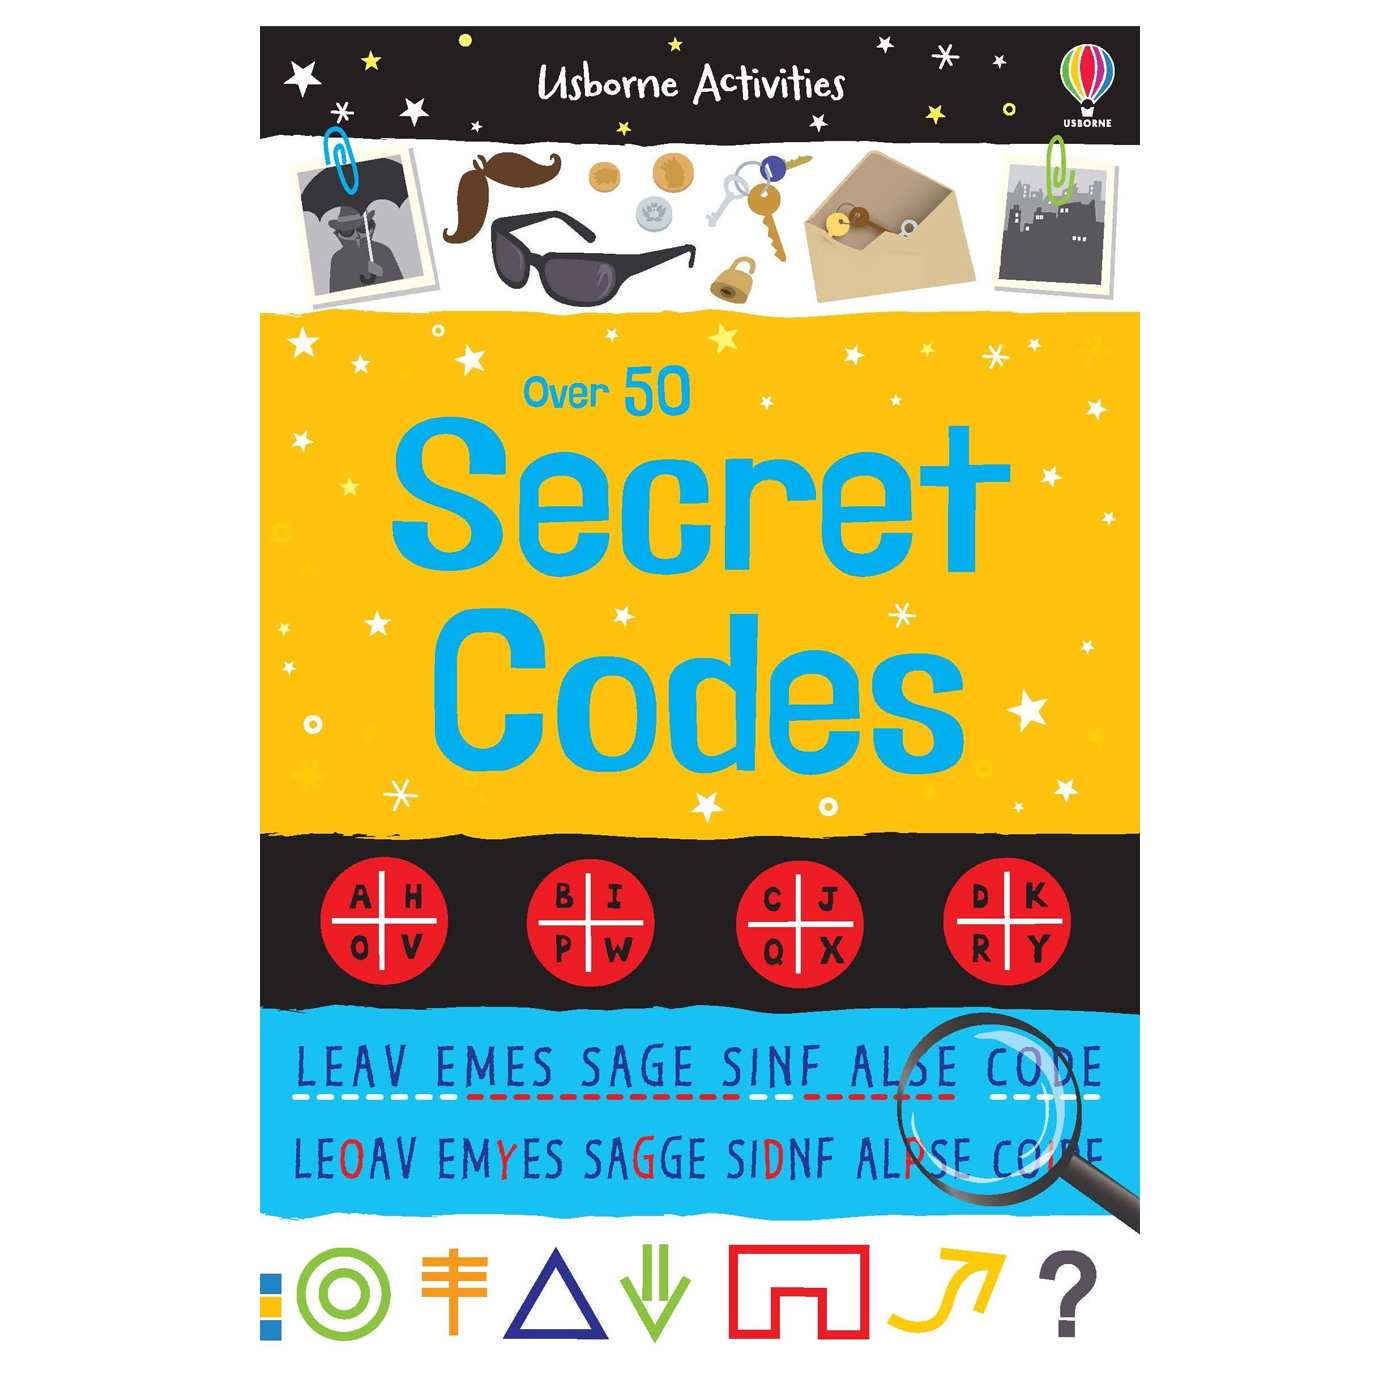  Over 50 Secret Codes